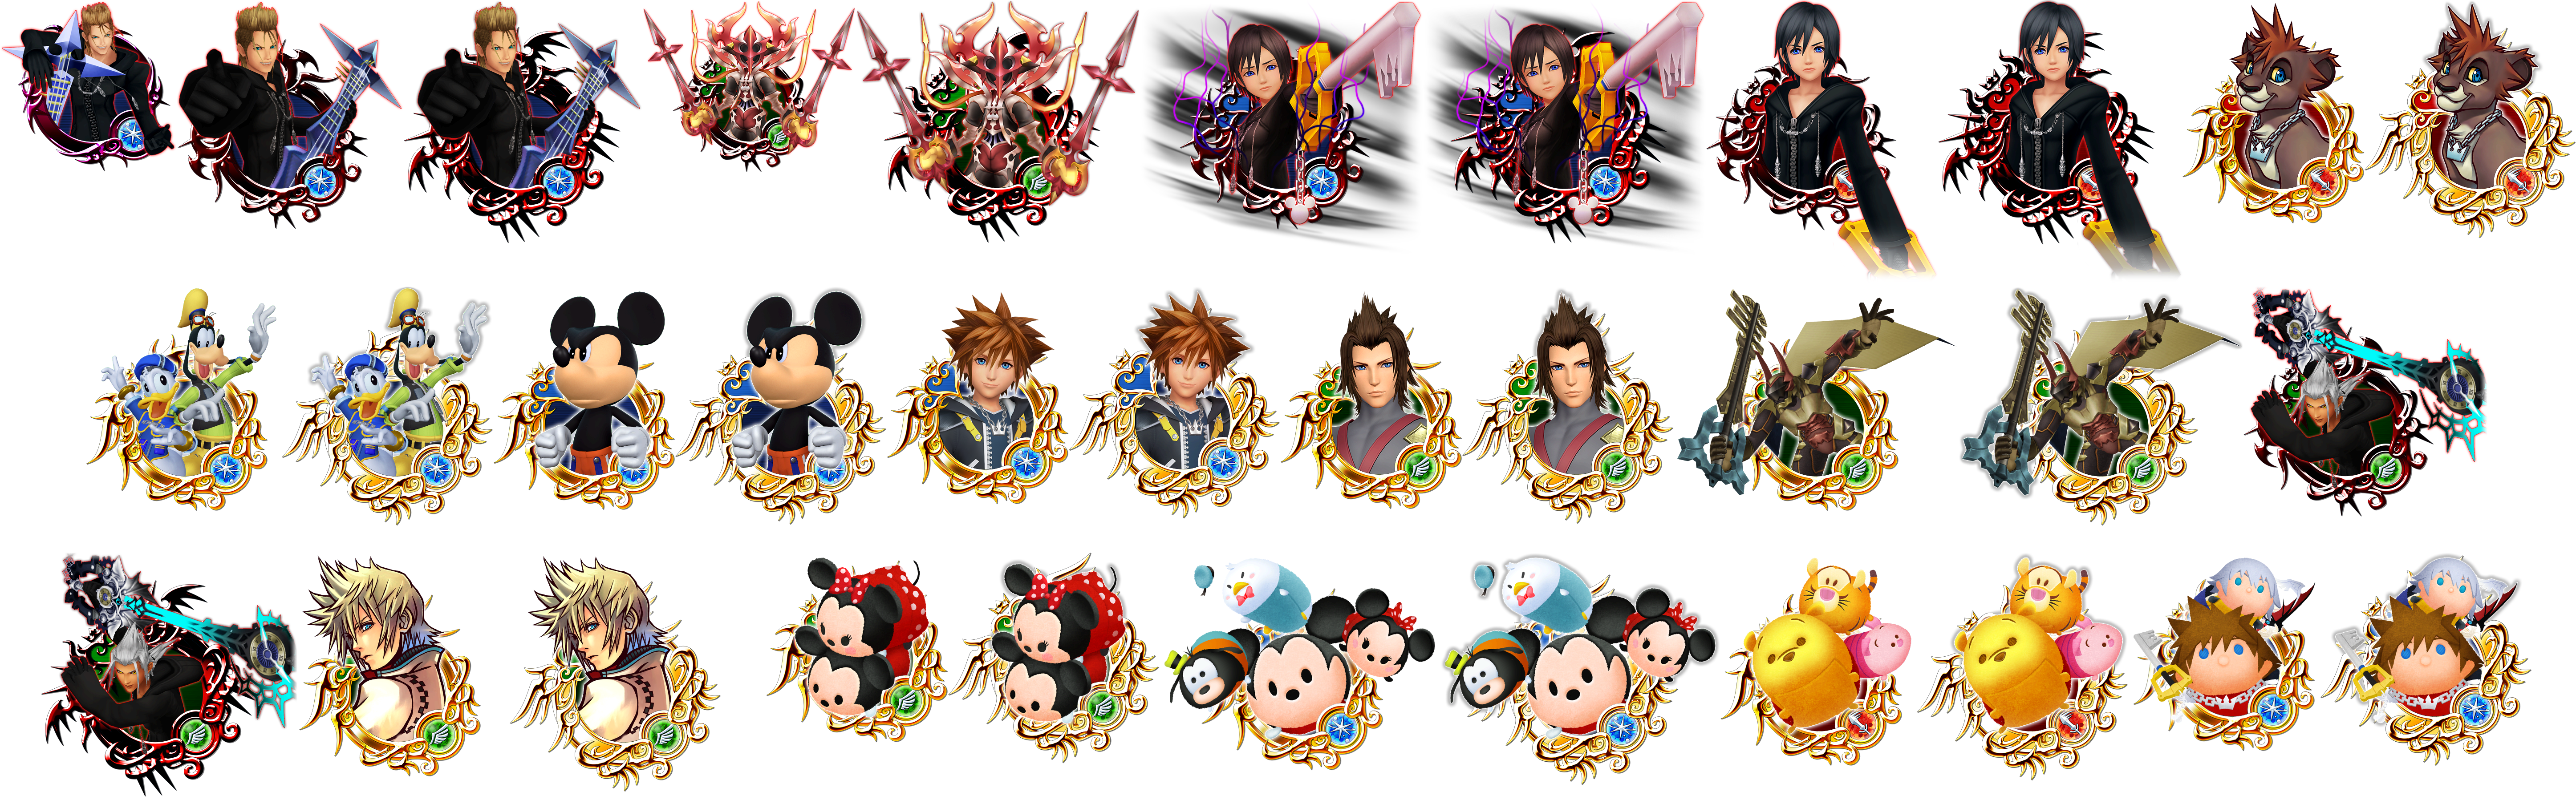 Kingdom Hearts Union χ - Set 18